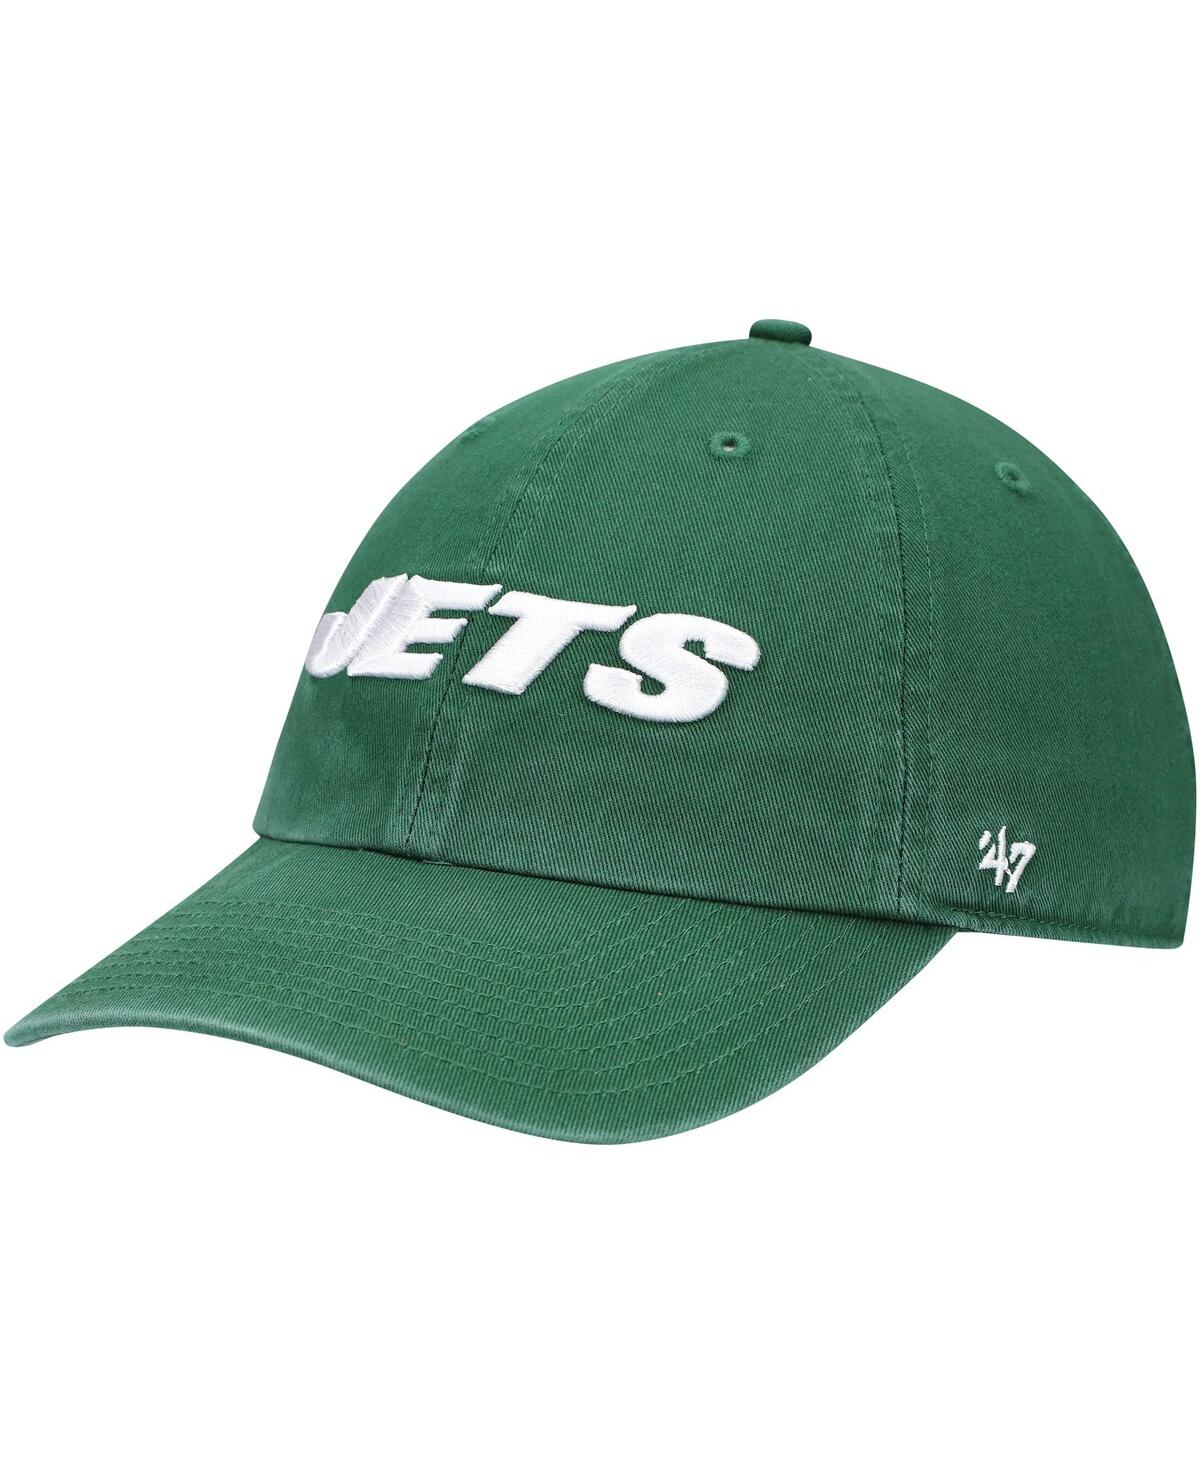 47 Brand Men's '47 Green New York Jets Clean Up Script Adjustable Hat